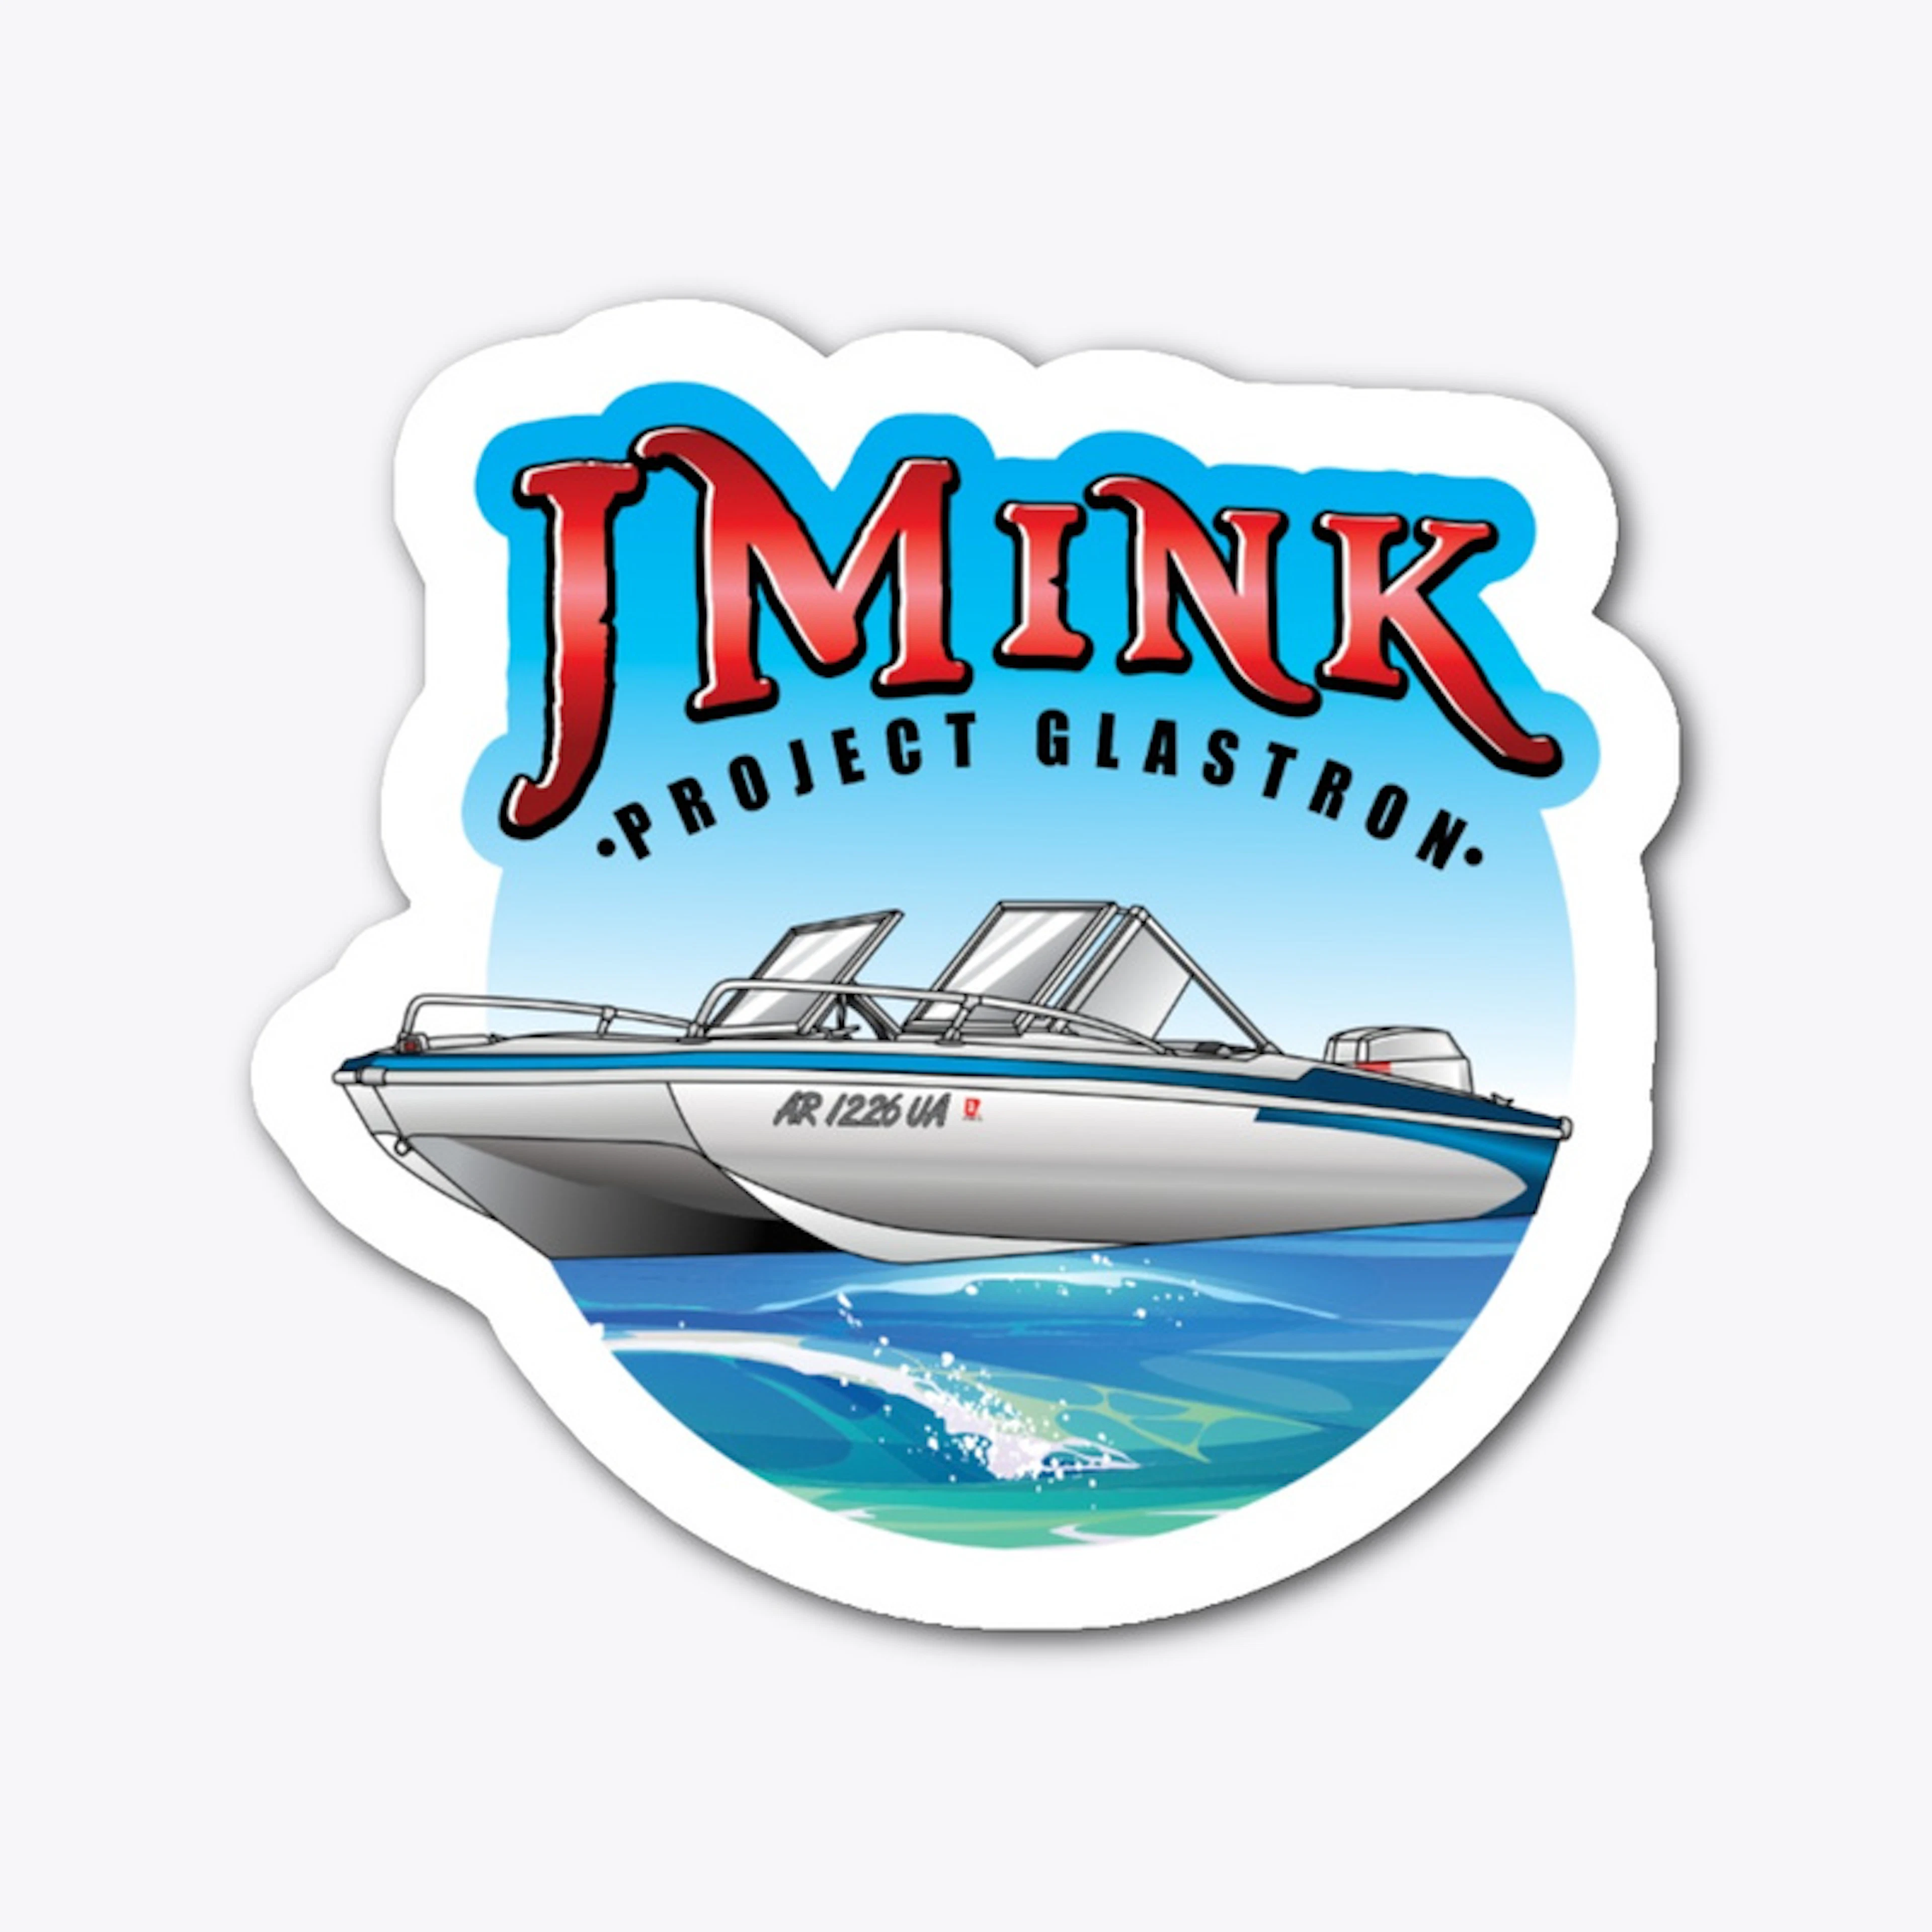 JMink Project Glastron Sticker